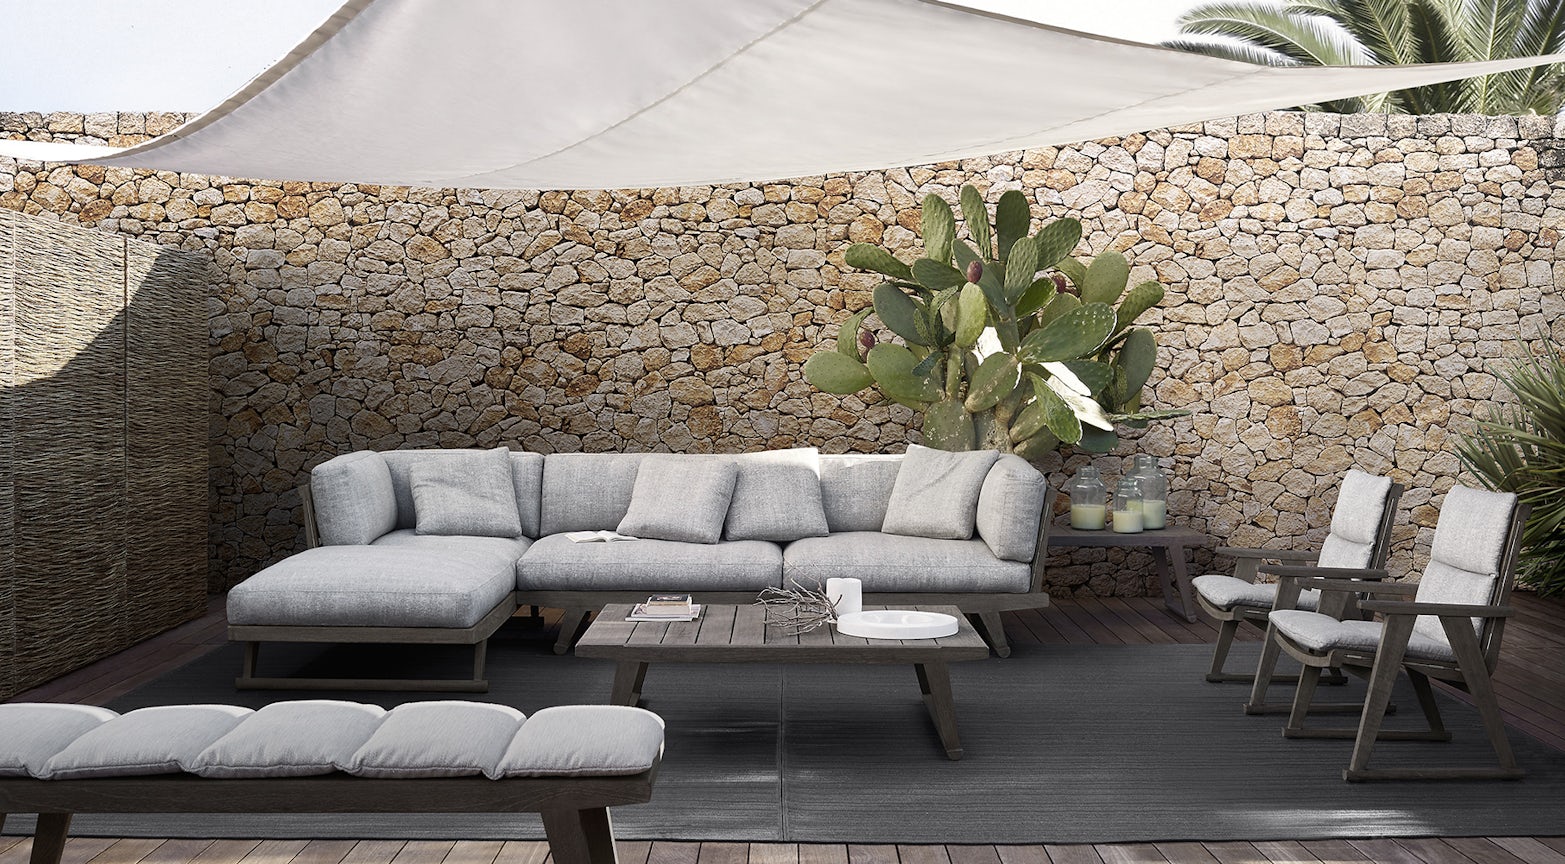 Gio-sofa-outdoor-BBItalia-11